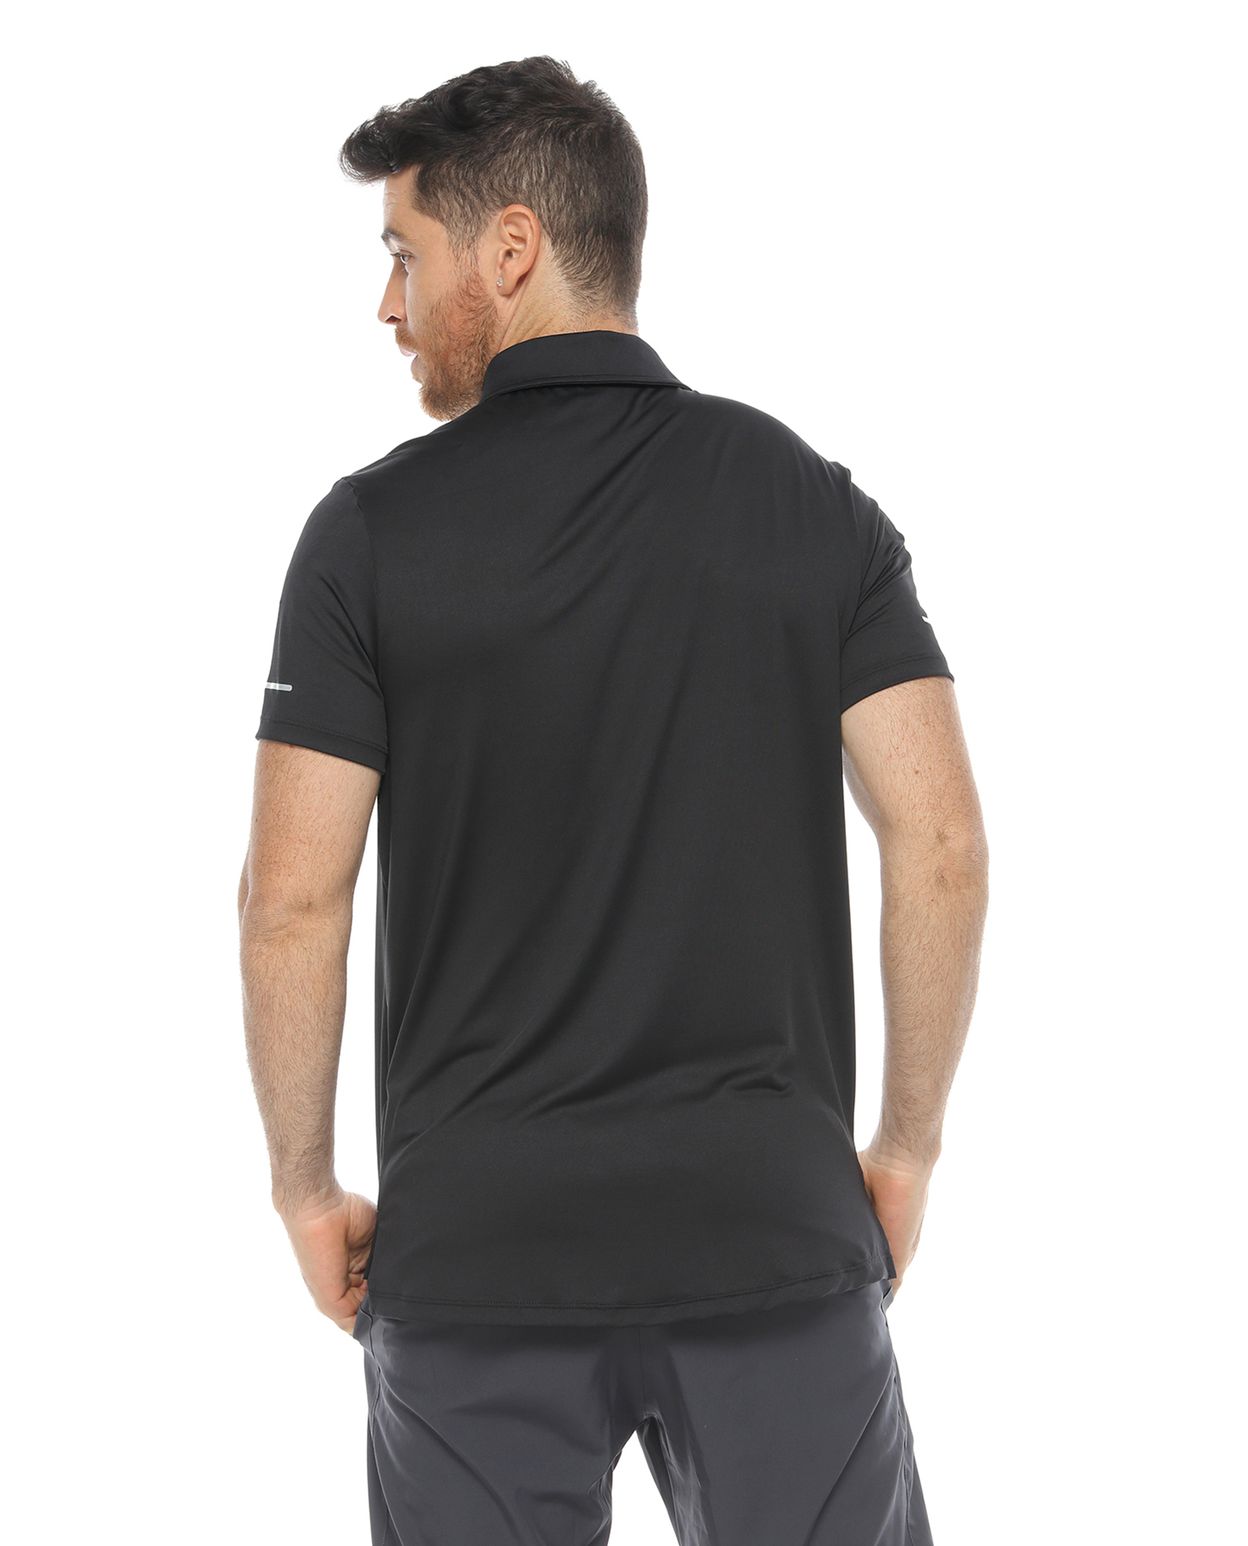 Camiseta básica negra hombre - racketball movil